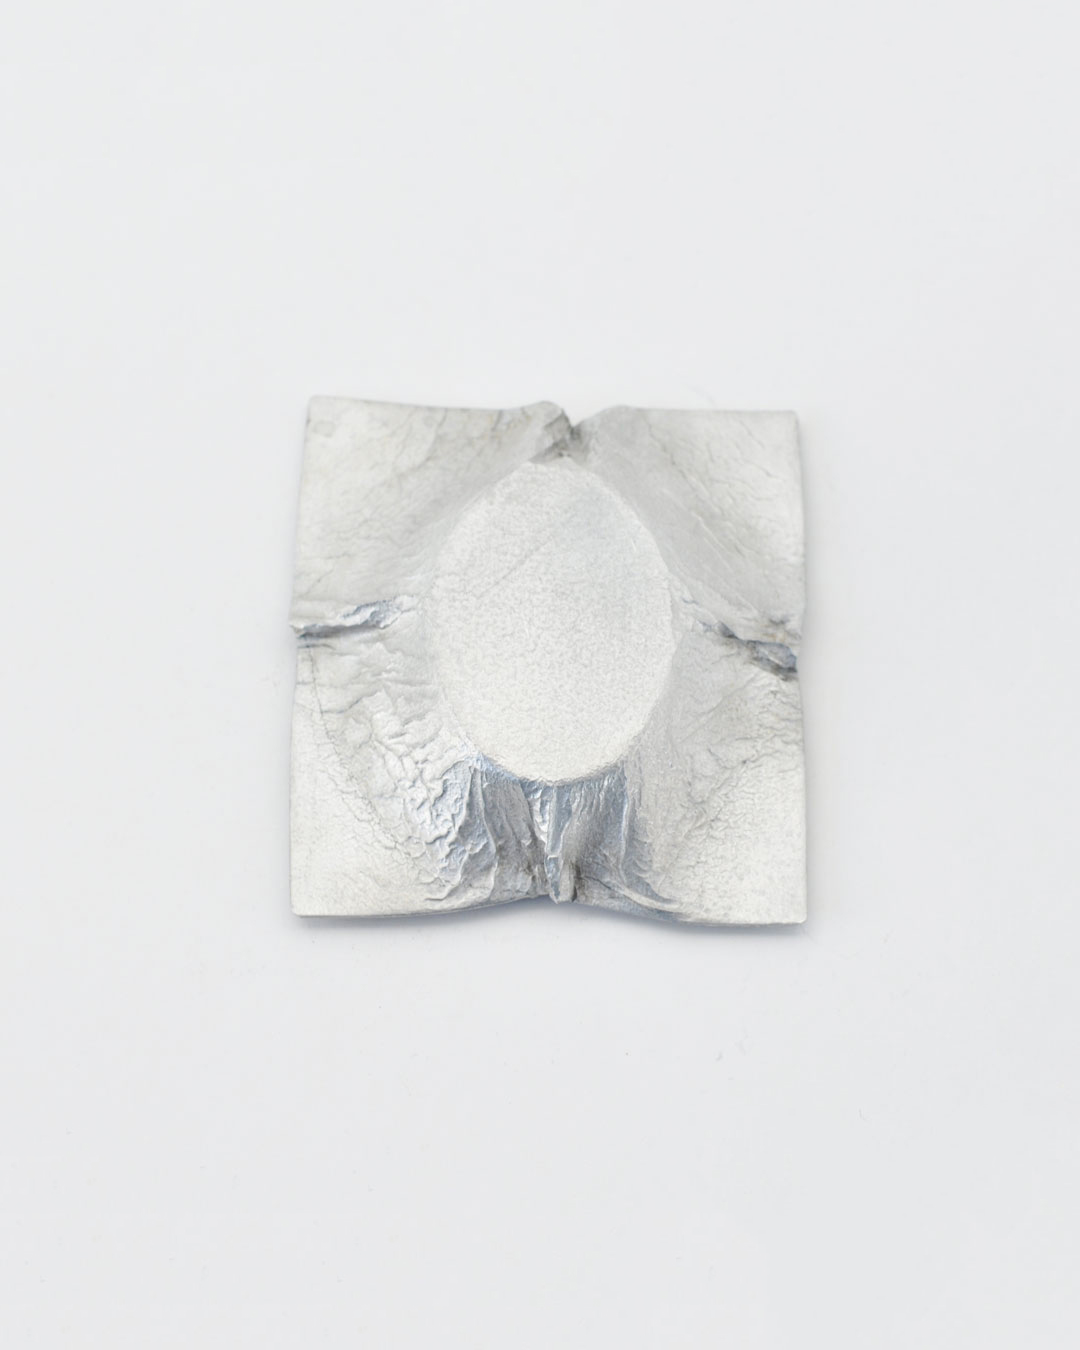 Anders Ljungberg, Intension Large #2, 2019, brooch; aluminium, steel, 91 x 84 x 20 mm, €550